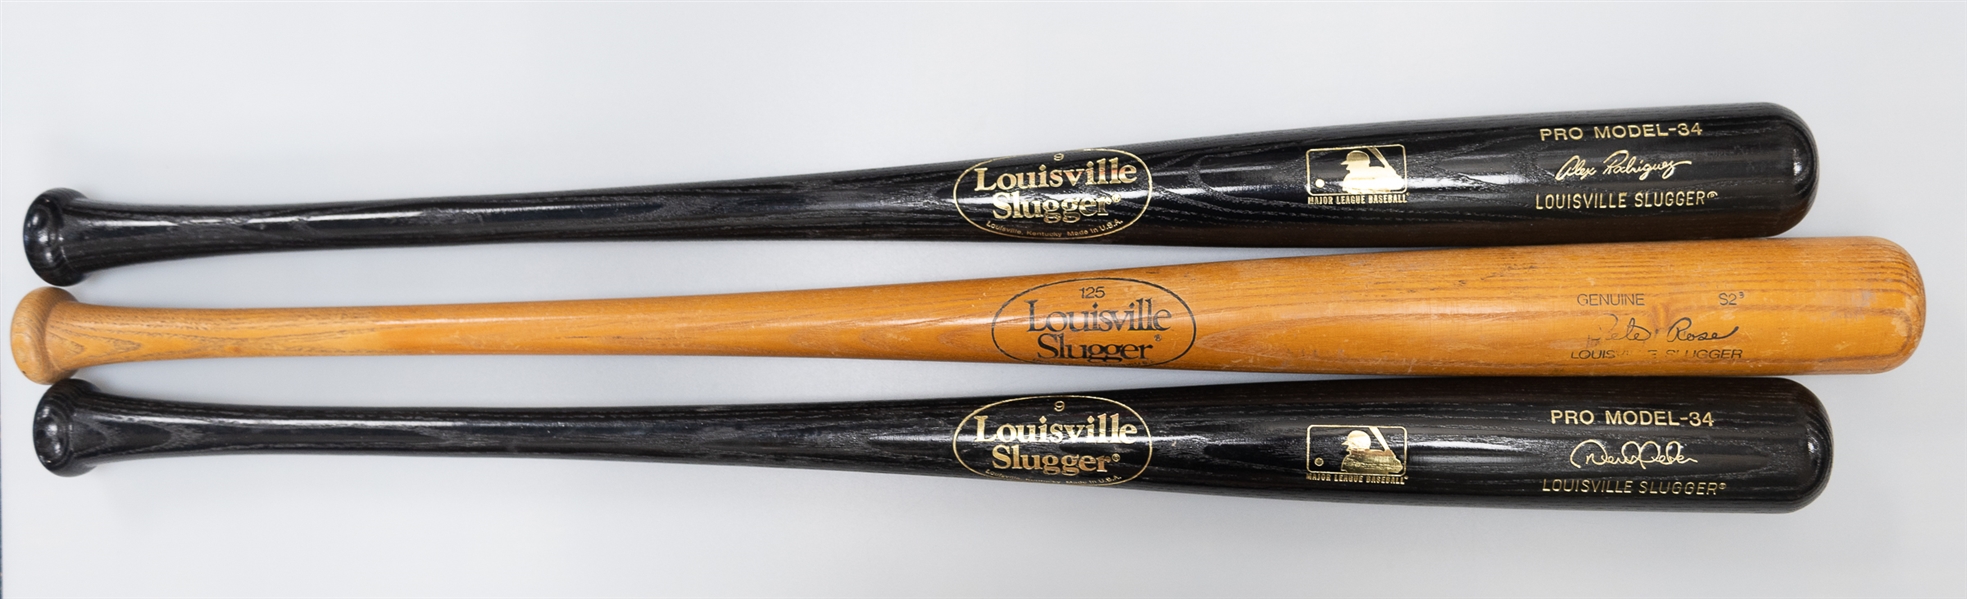 Lot of (3) Louisville Slugger Baseball Bats w. Derek Jeter & Alex Rodriguez Pro Models and Vintage Adirondack Bat Shipping Box